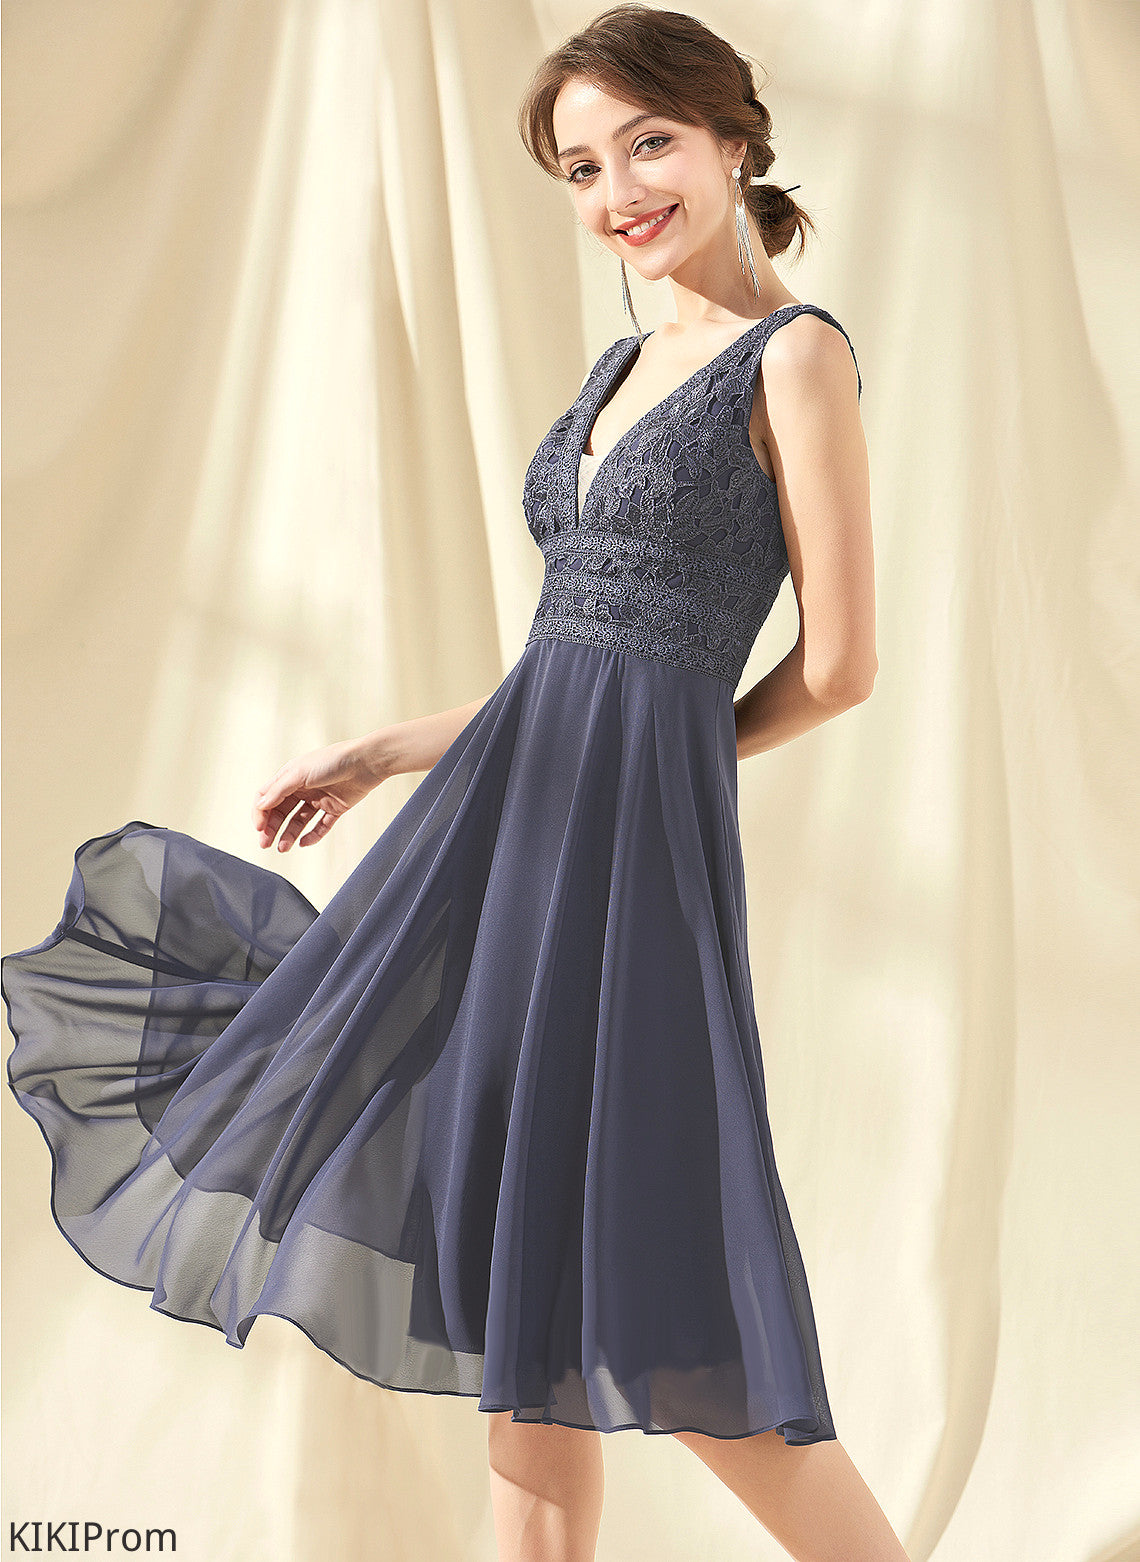 Chiffon V-neck Homecoming Homecoming Dresses Lace A-Line Knee-Length Dress Lauretta